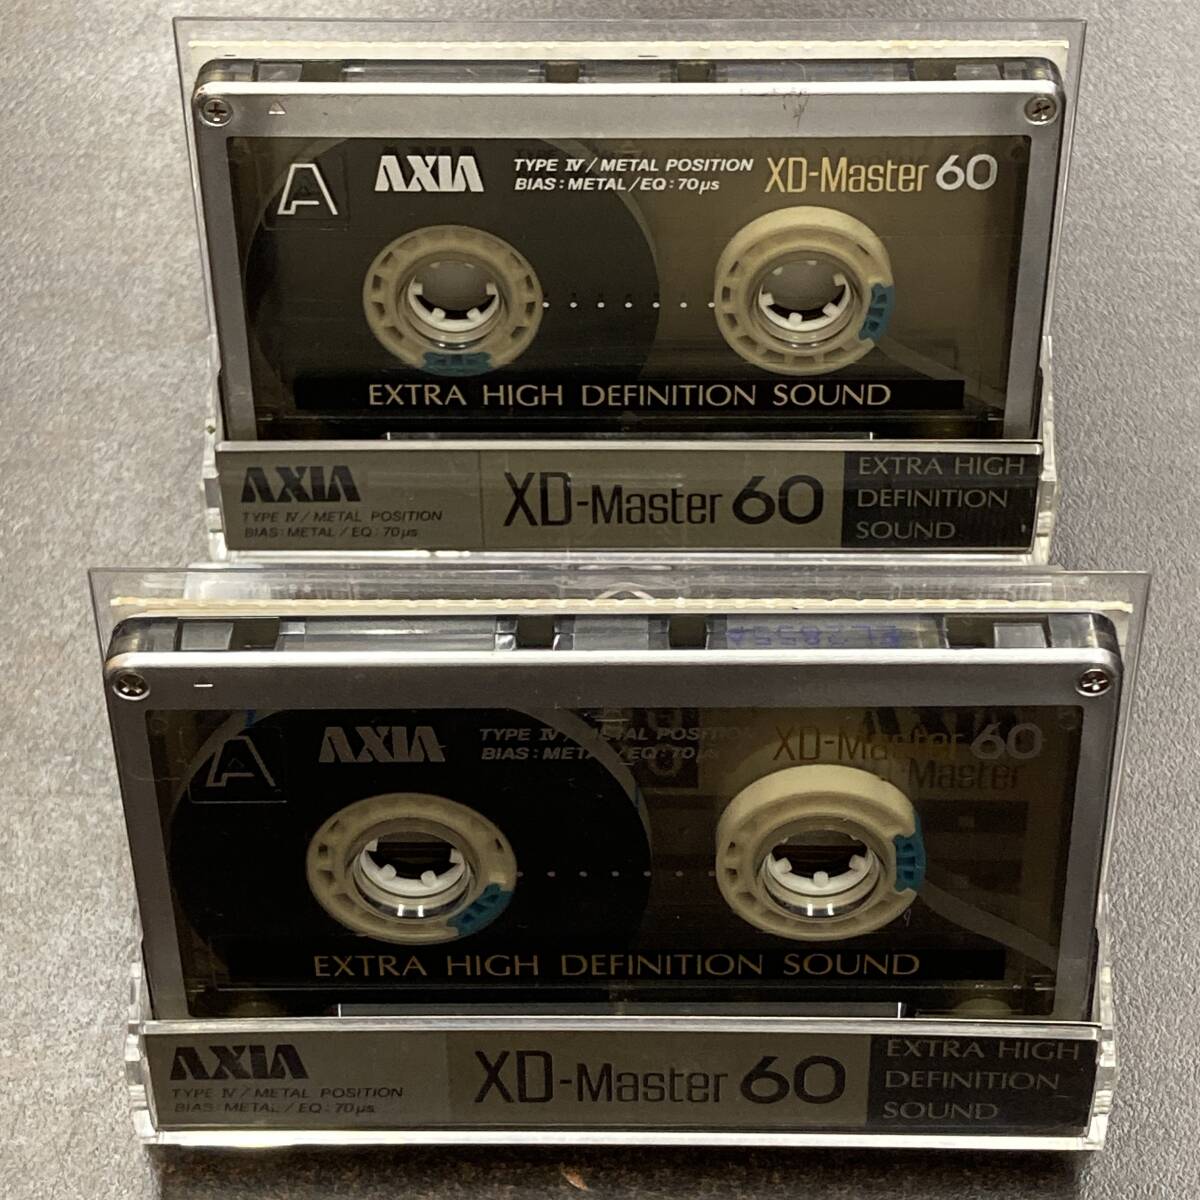 1791T アクシア XD-Master 60分 メタル 2本 カセットテープ/Two AXIA XD-Master 60 Type IV Metal Position Audio Cassette_画像1